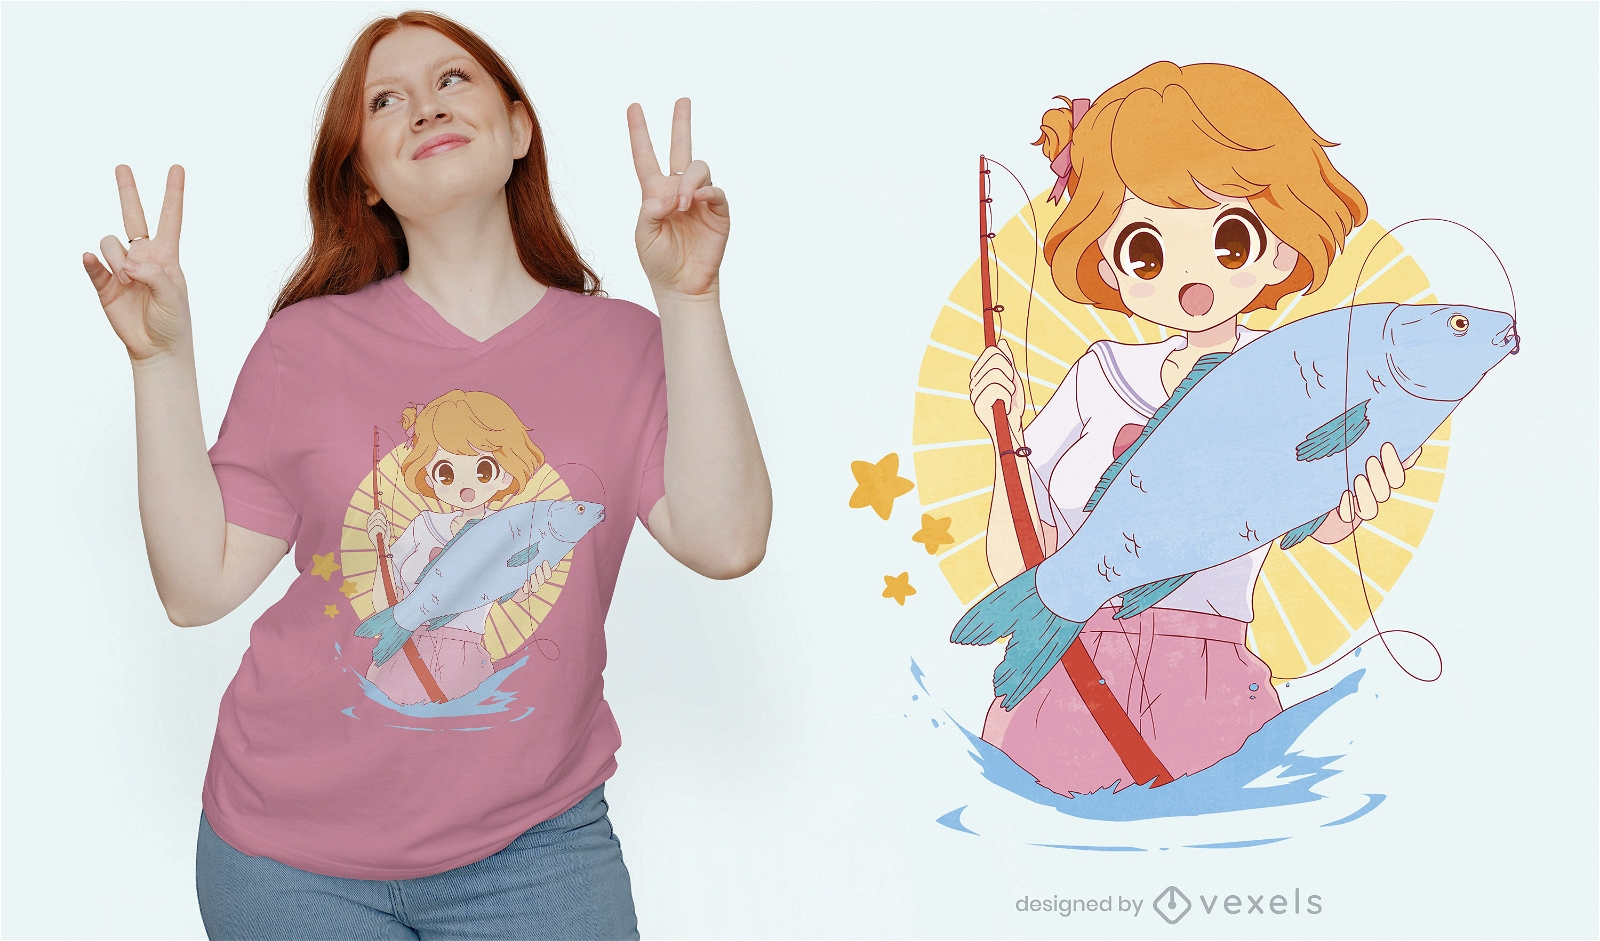 https://images.vexels.com/media/users/3/292865/raw/1ba40fe35fc6249622eb14cedbfe4433-cute-anime-girl-fishing-t-shirt-design.jpg